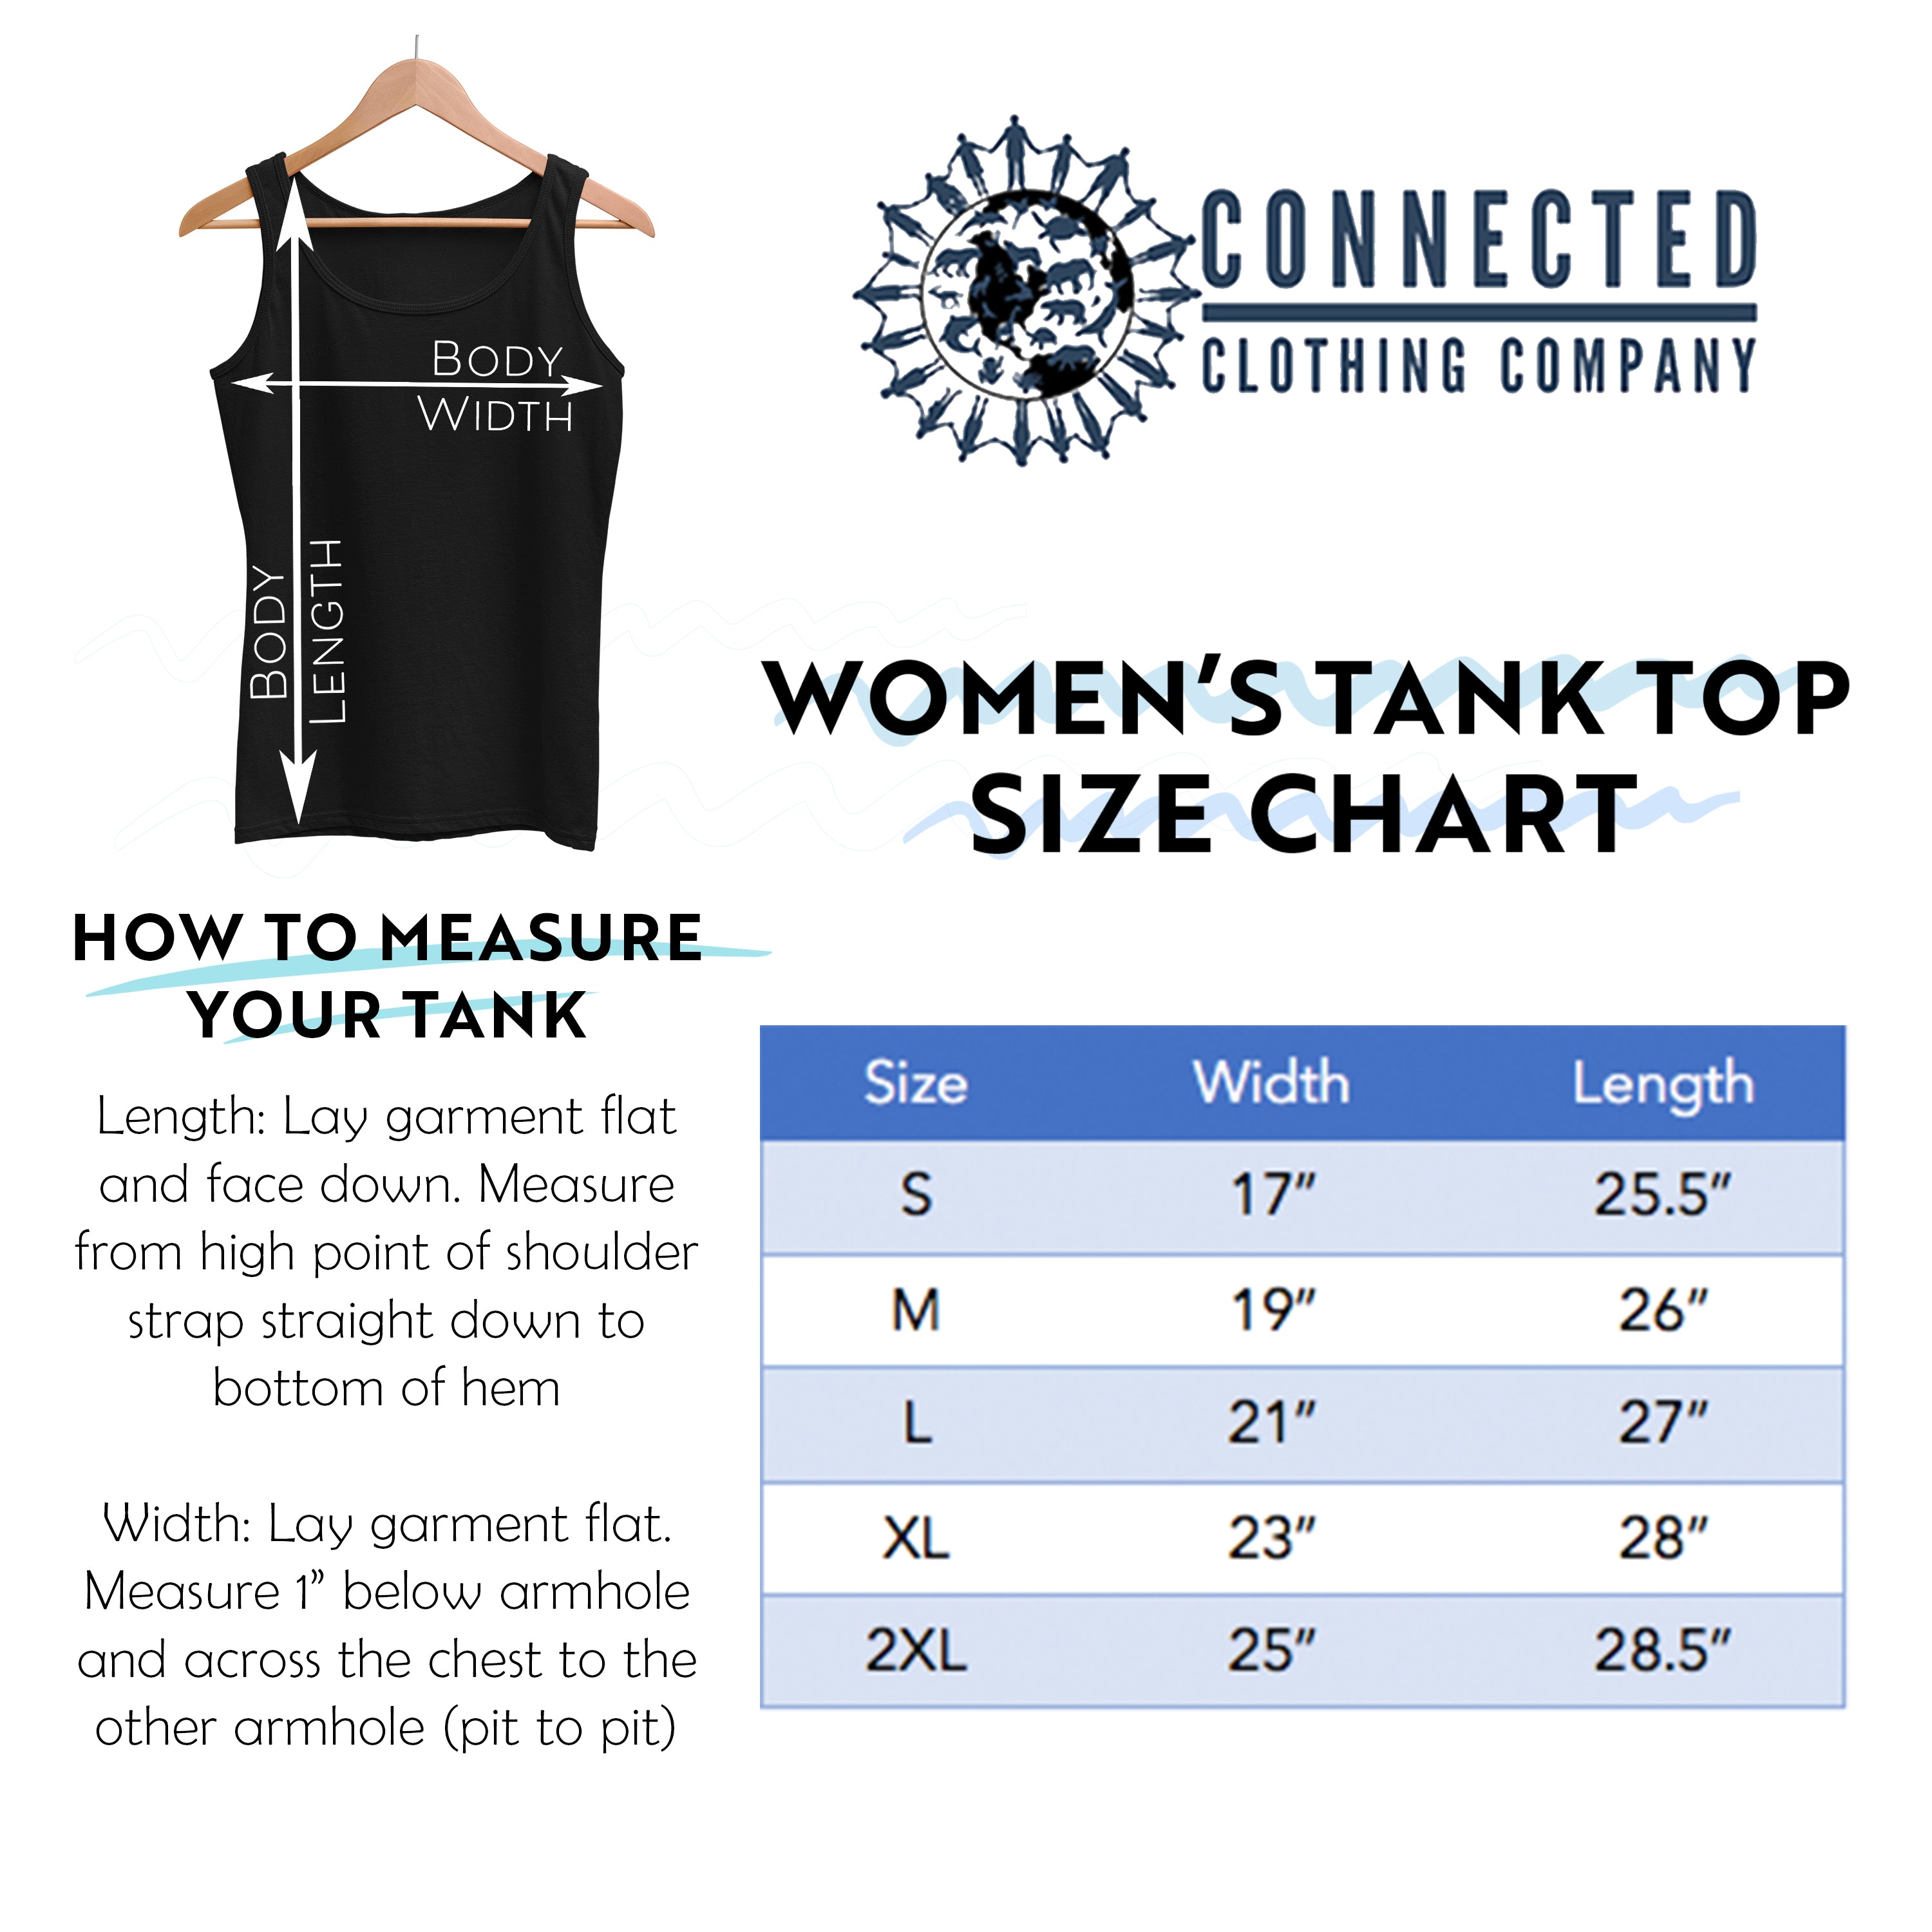 Women's Tank Top Size Chart - marktwainstoryteller - Ethical & Sustainable Clothing